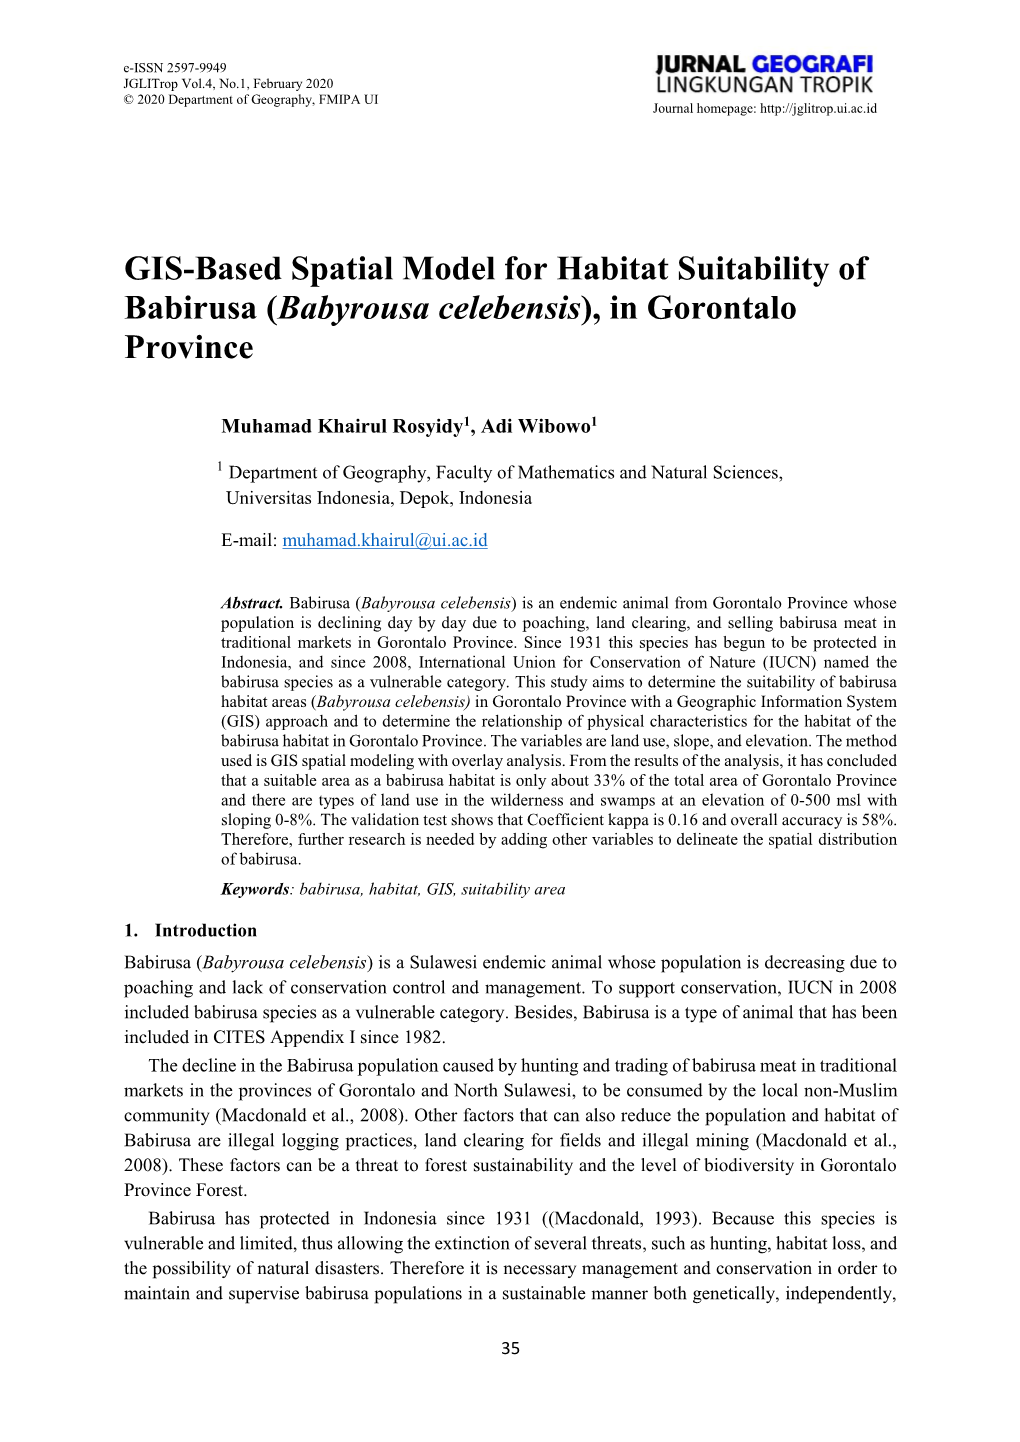 GIS-Based Spatial Model for Habitat Suitability of Babirusa (Babyrousa Celebensis), in Gorontalo Province